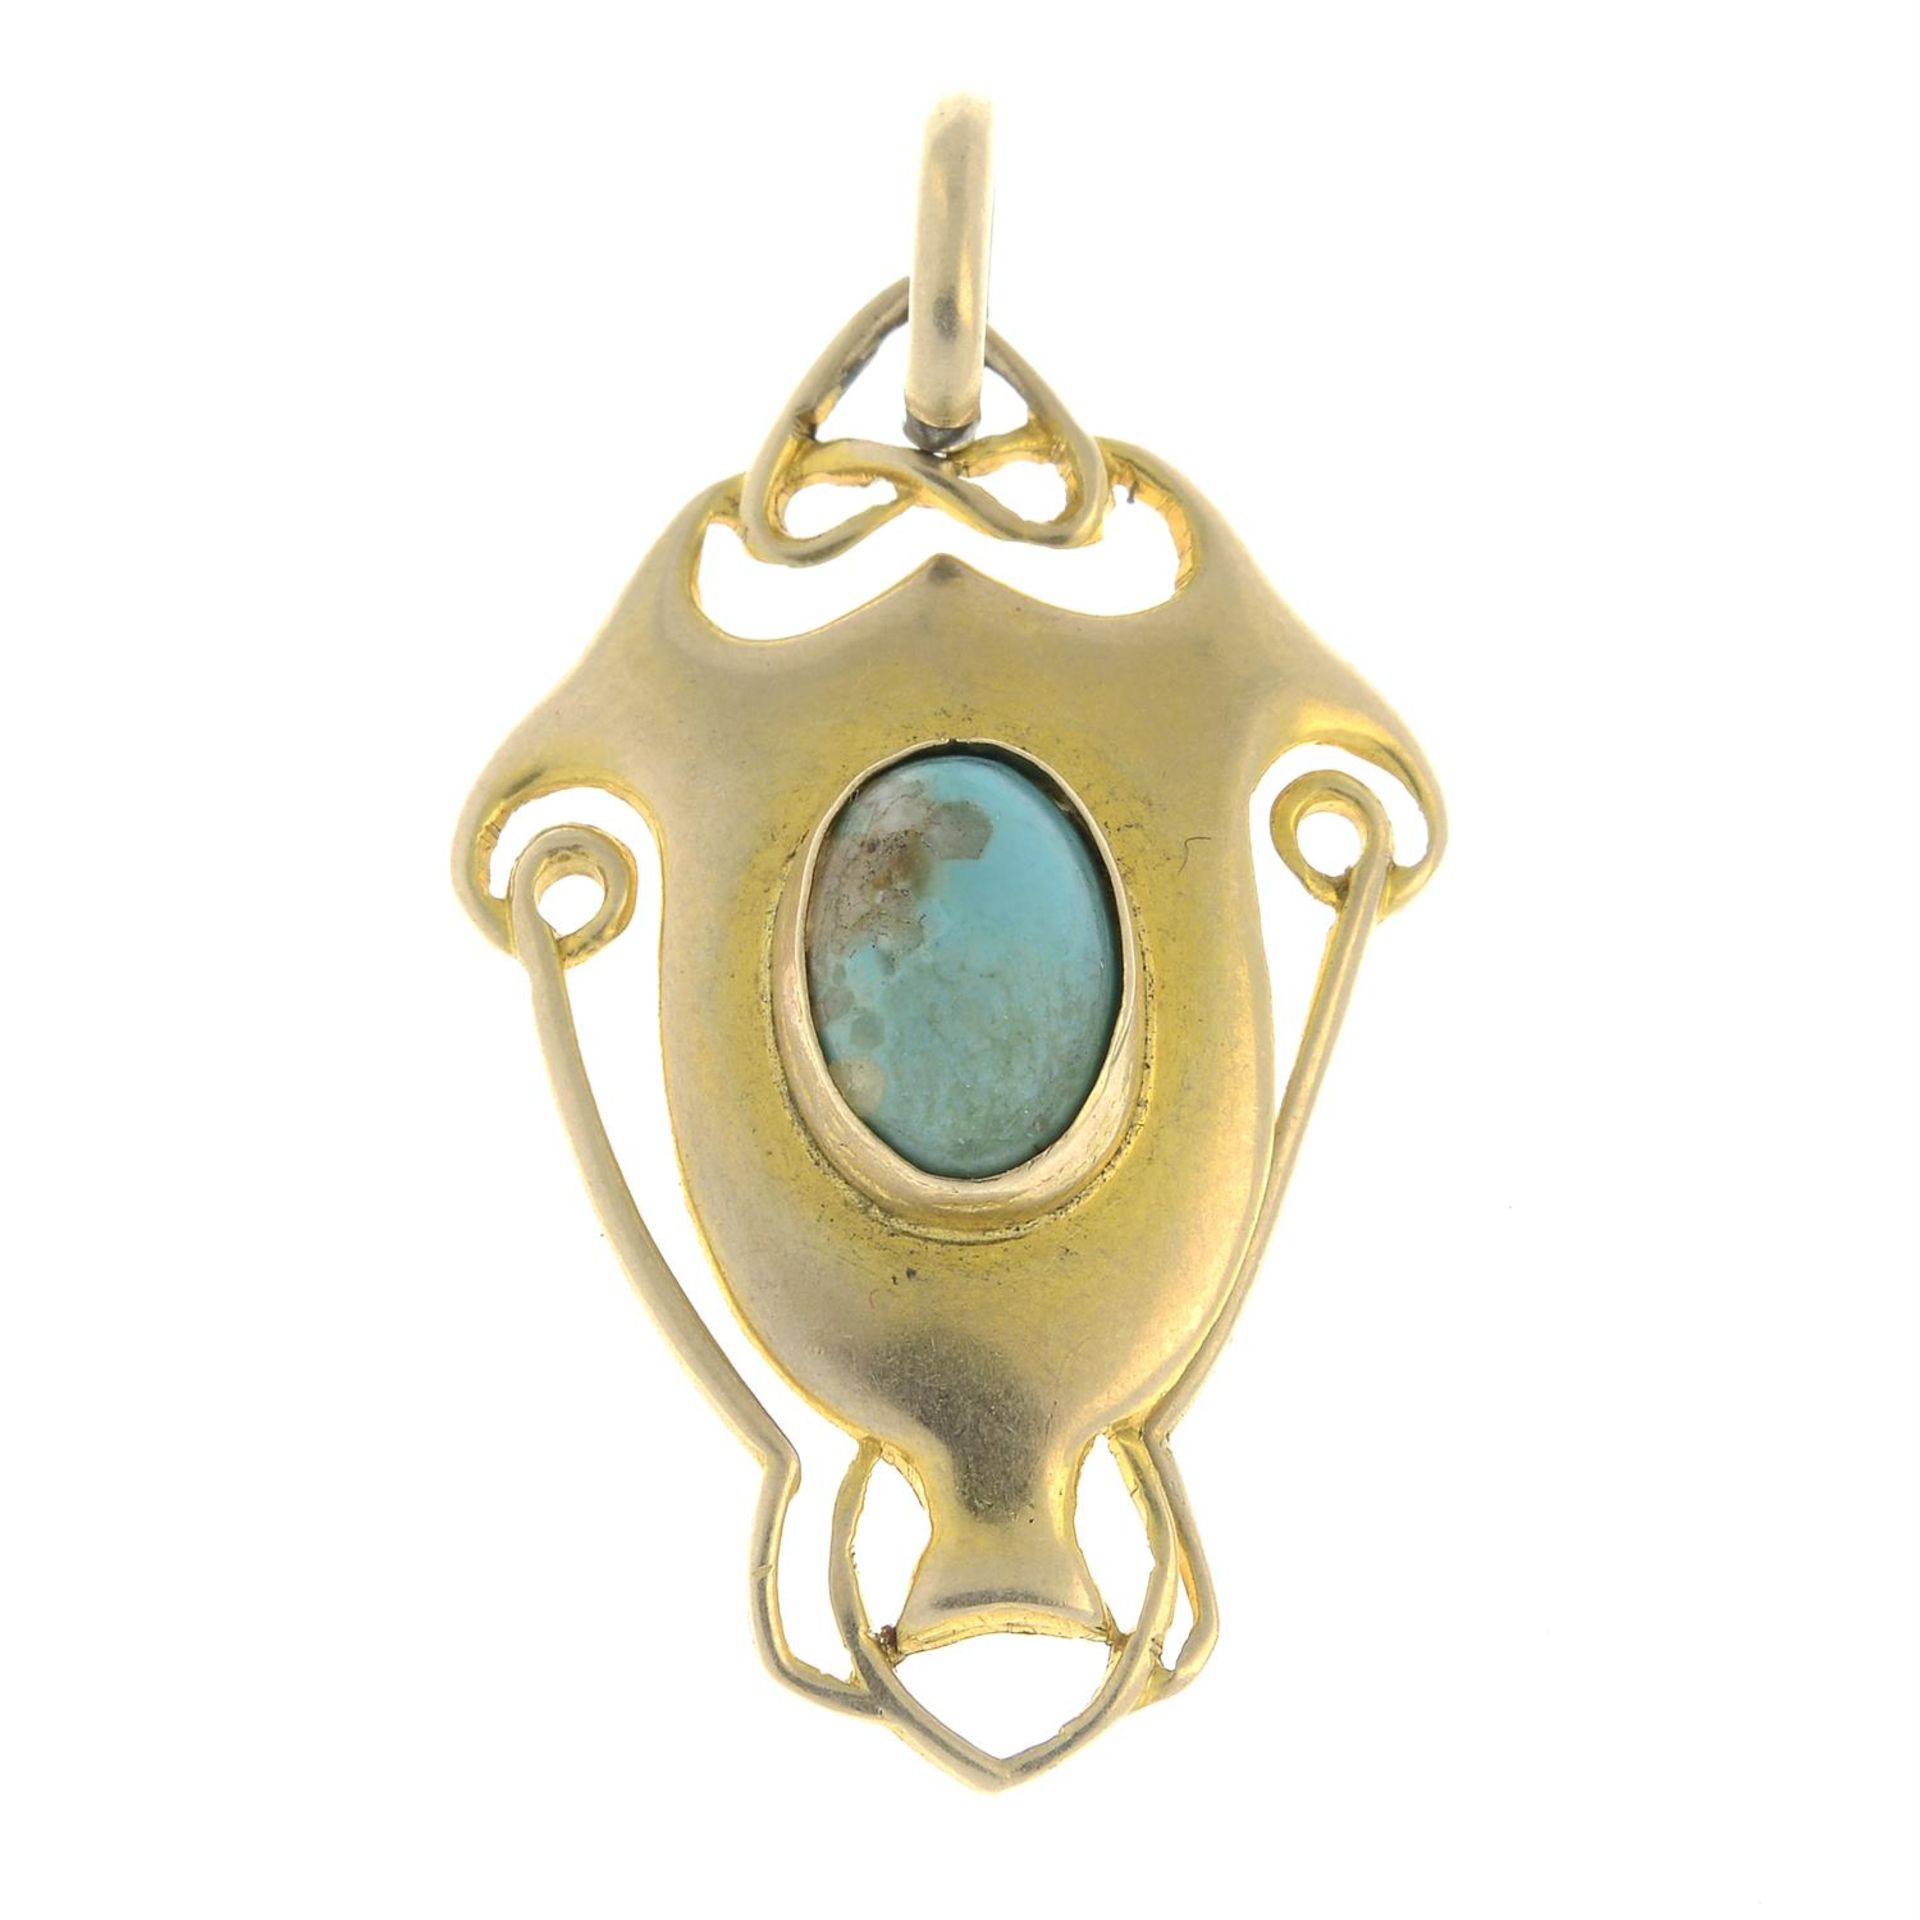 An Art Nouveau 9ct gold turquoise pendant, by Henry Matthews.